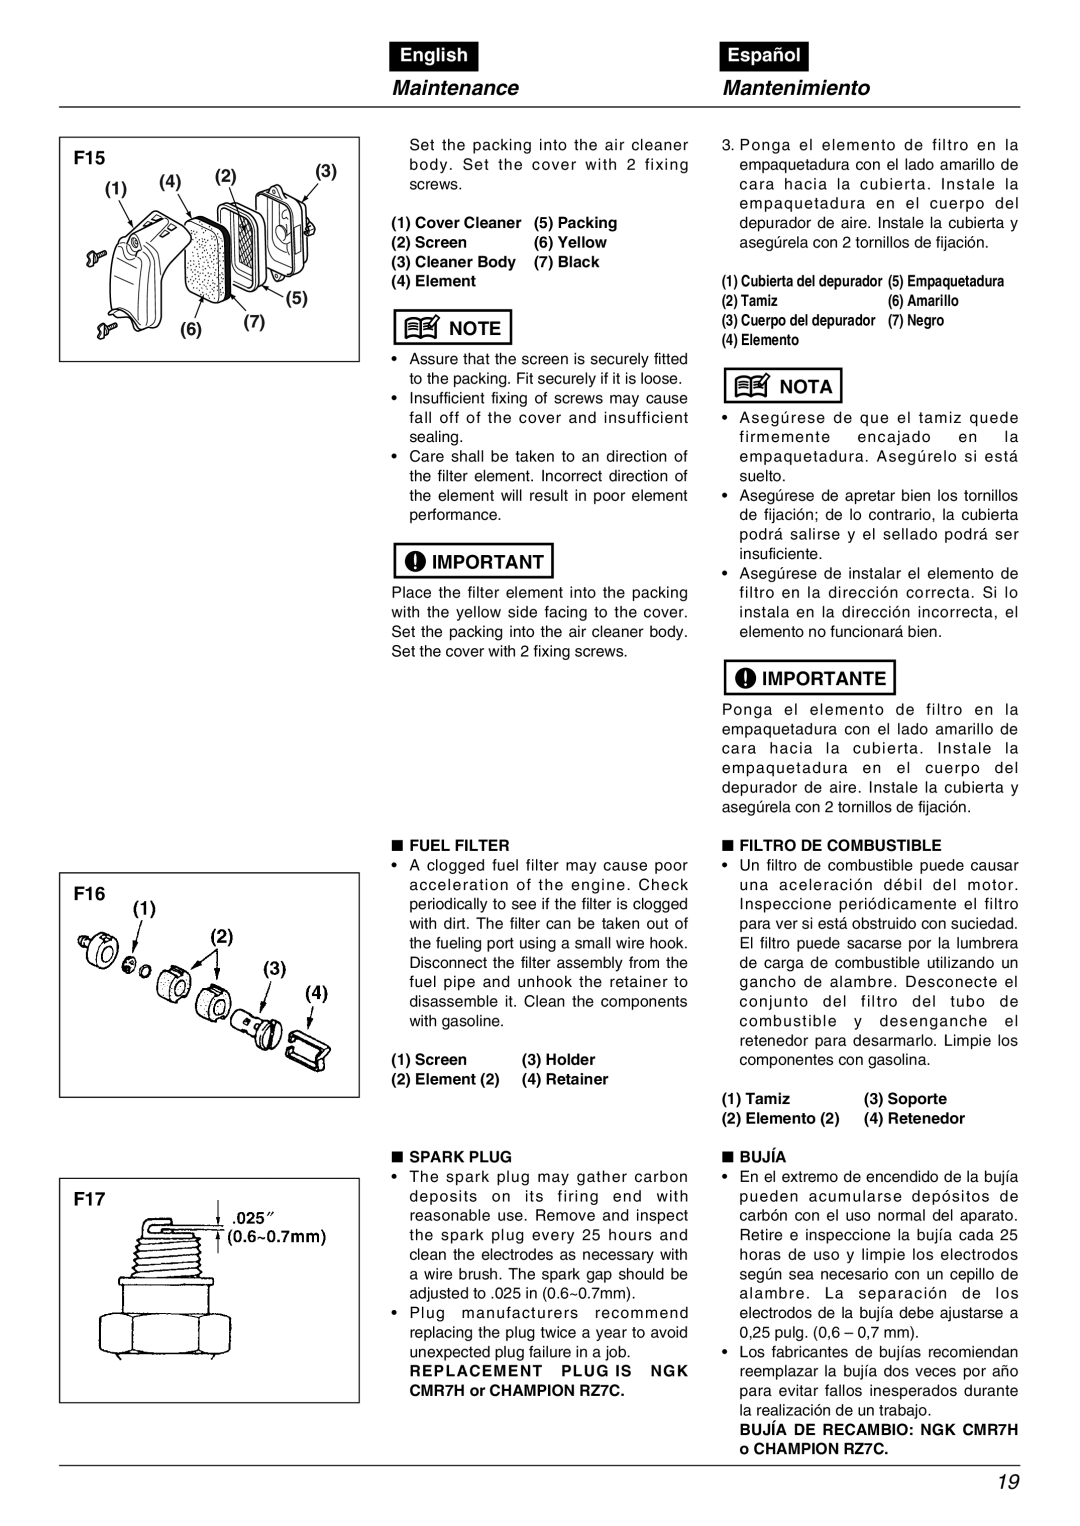 RedMax EBZ5000RH manual MaintenanceMantenimiento, English, Español, Nota, Importante 